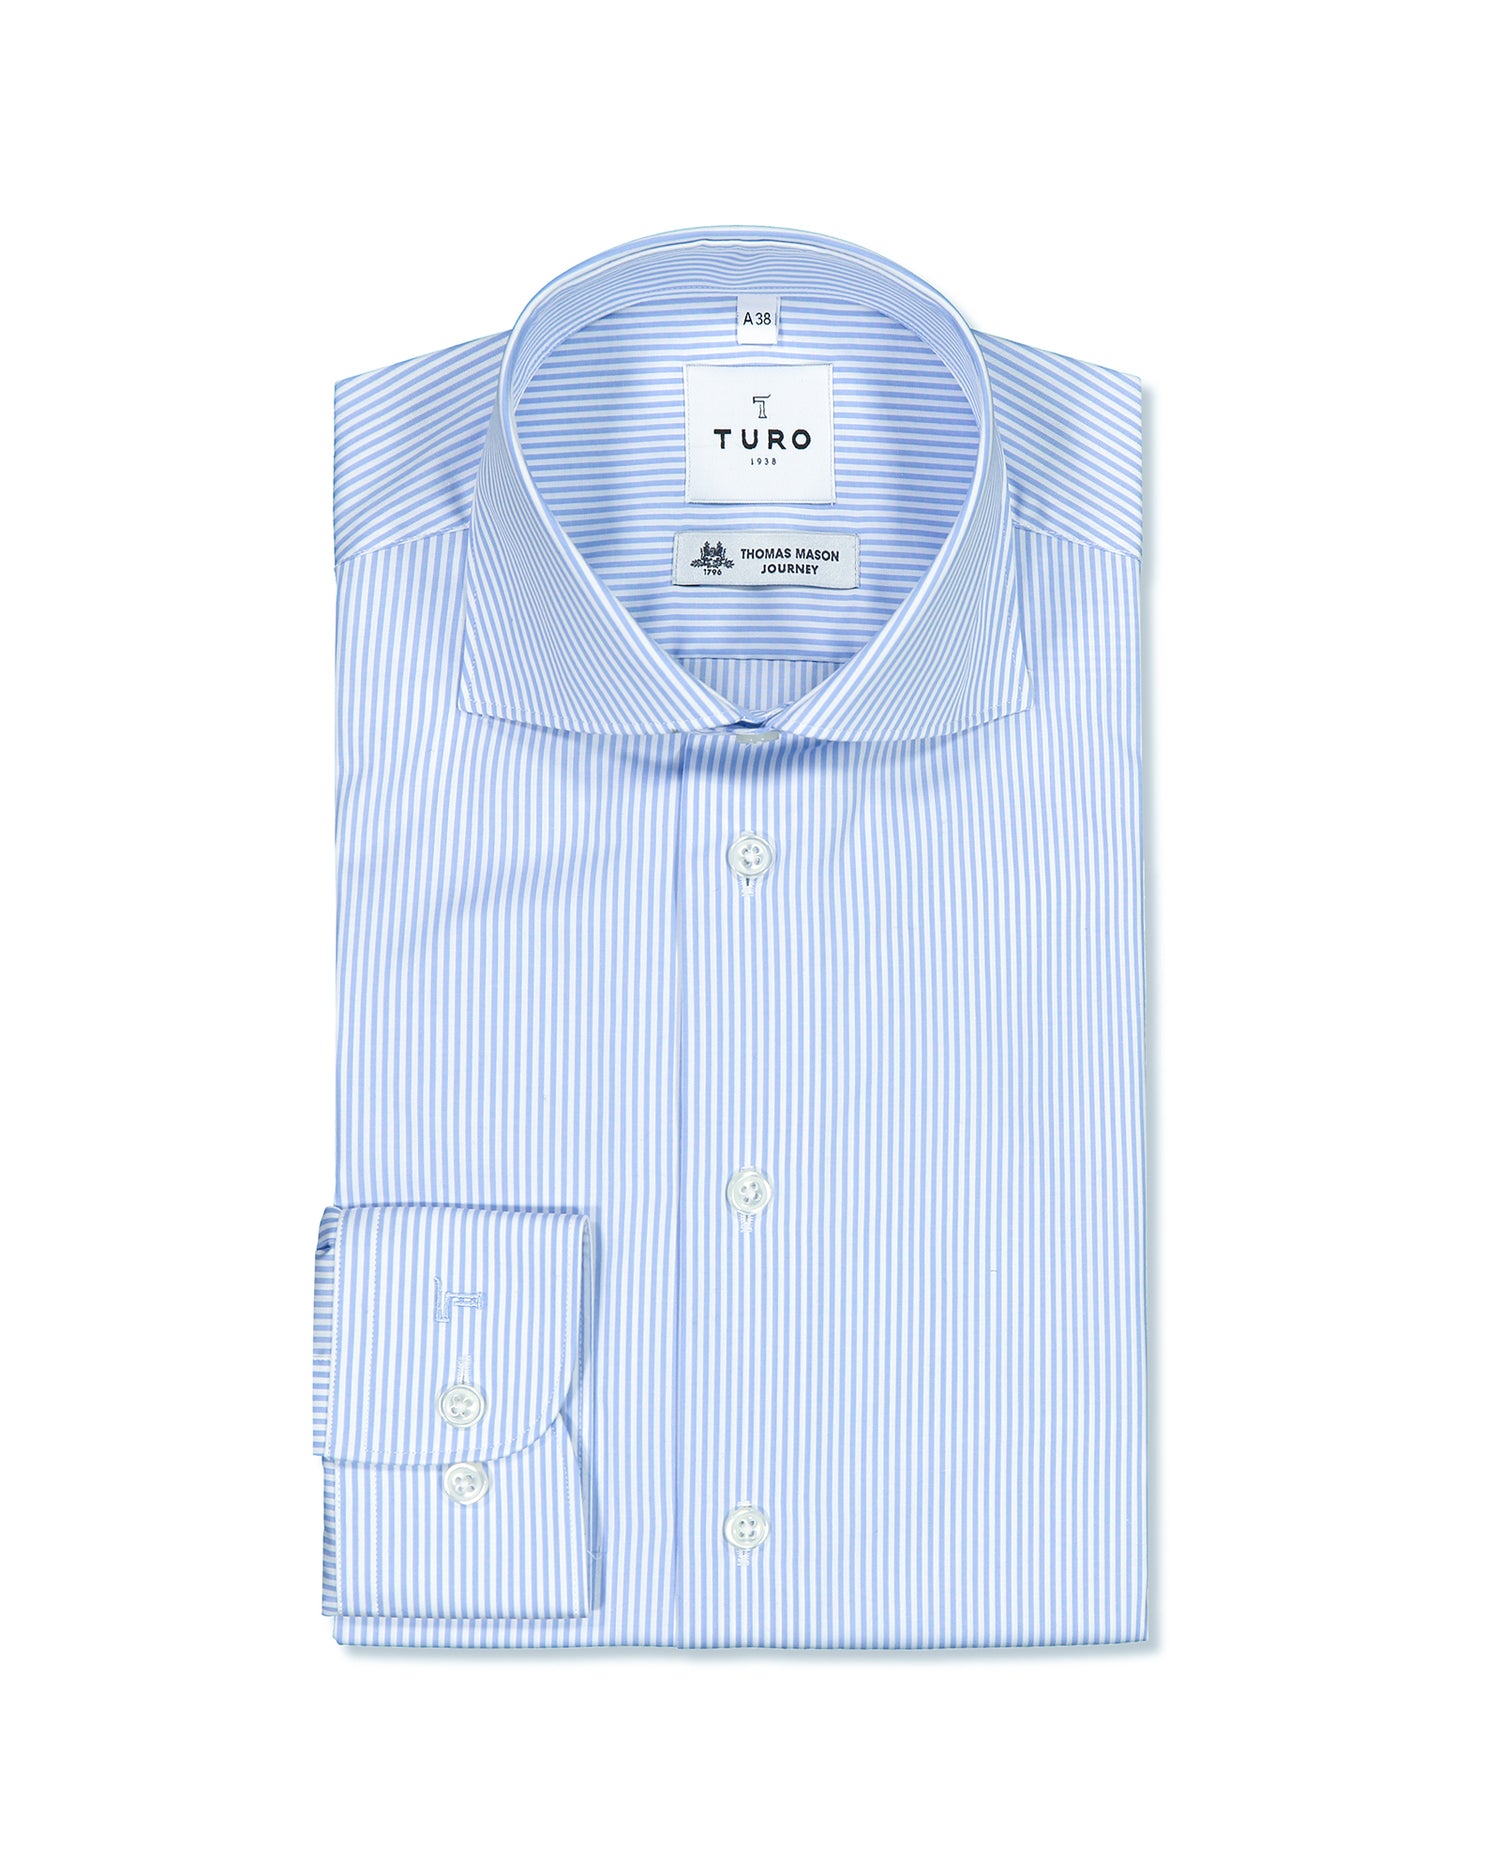 Slim fit shirt in blue stripe Thomas Mason journey (8489438970186)